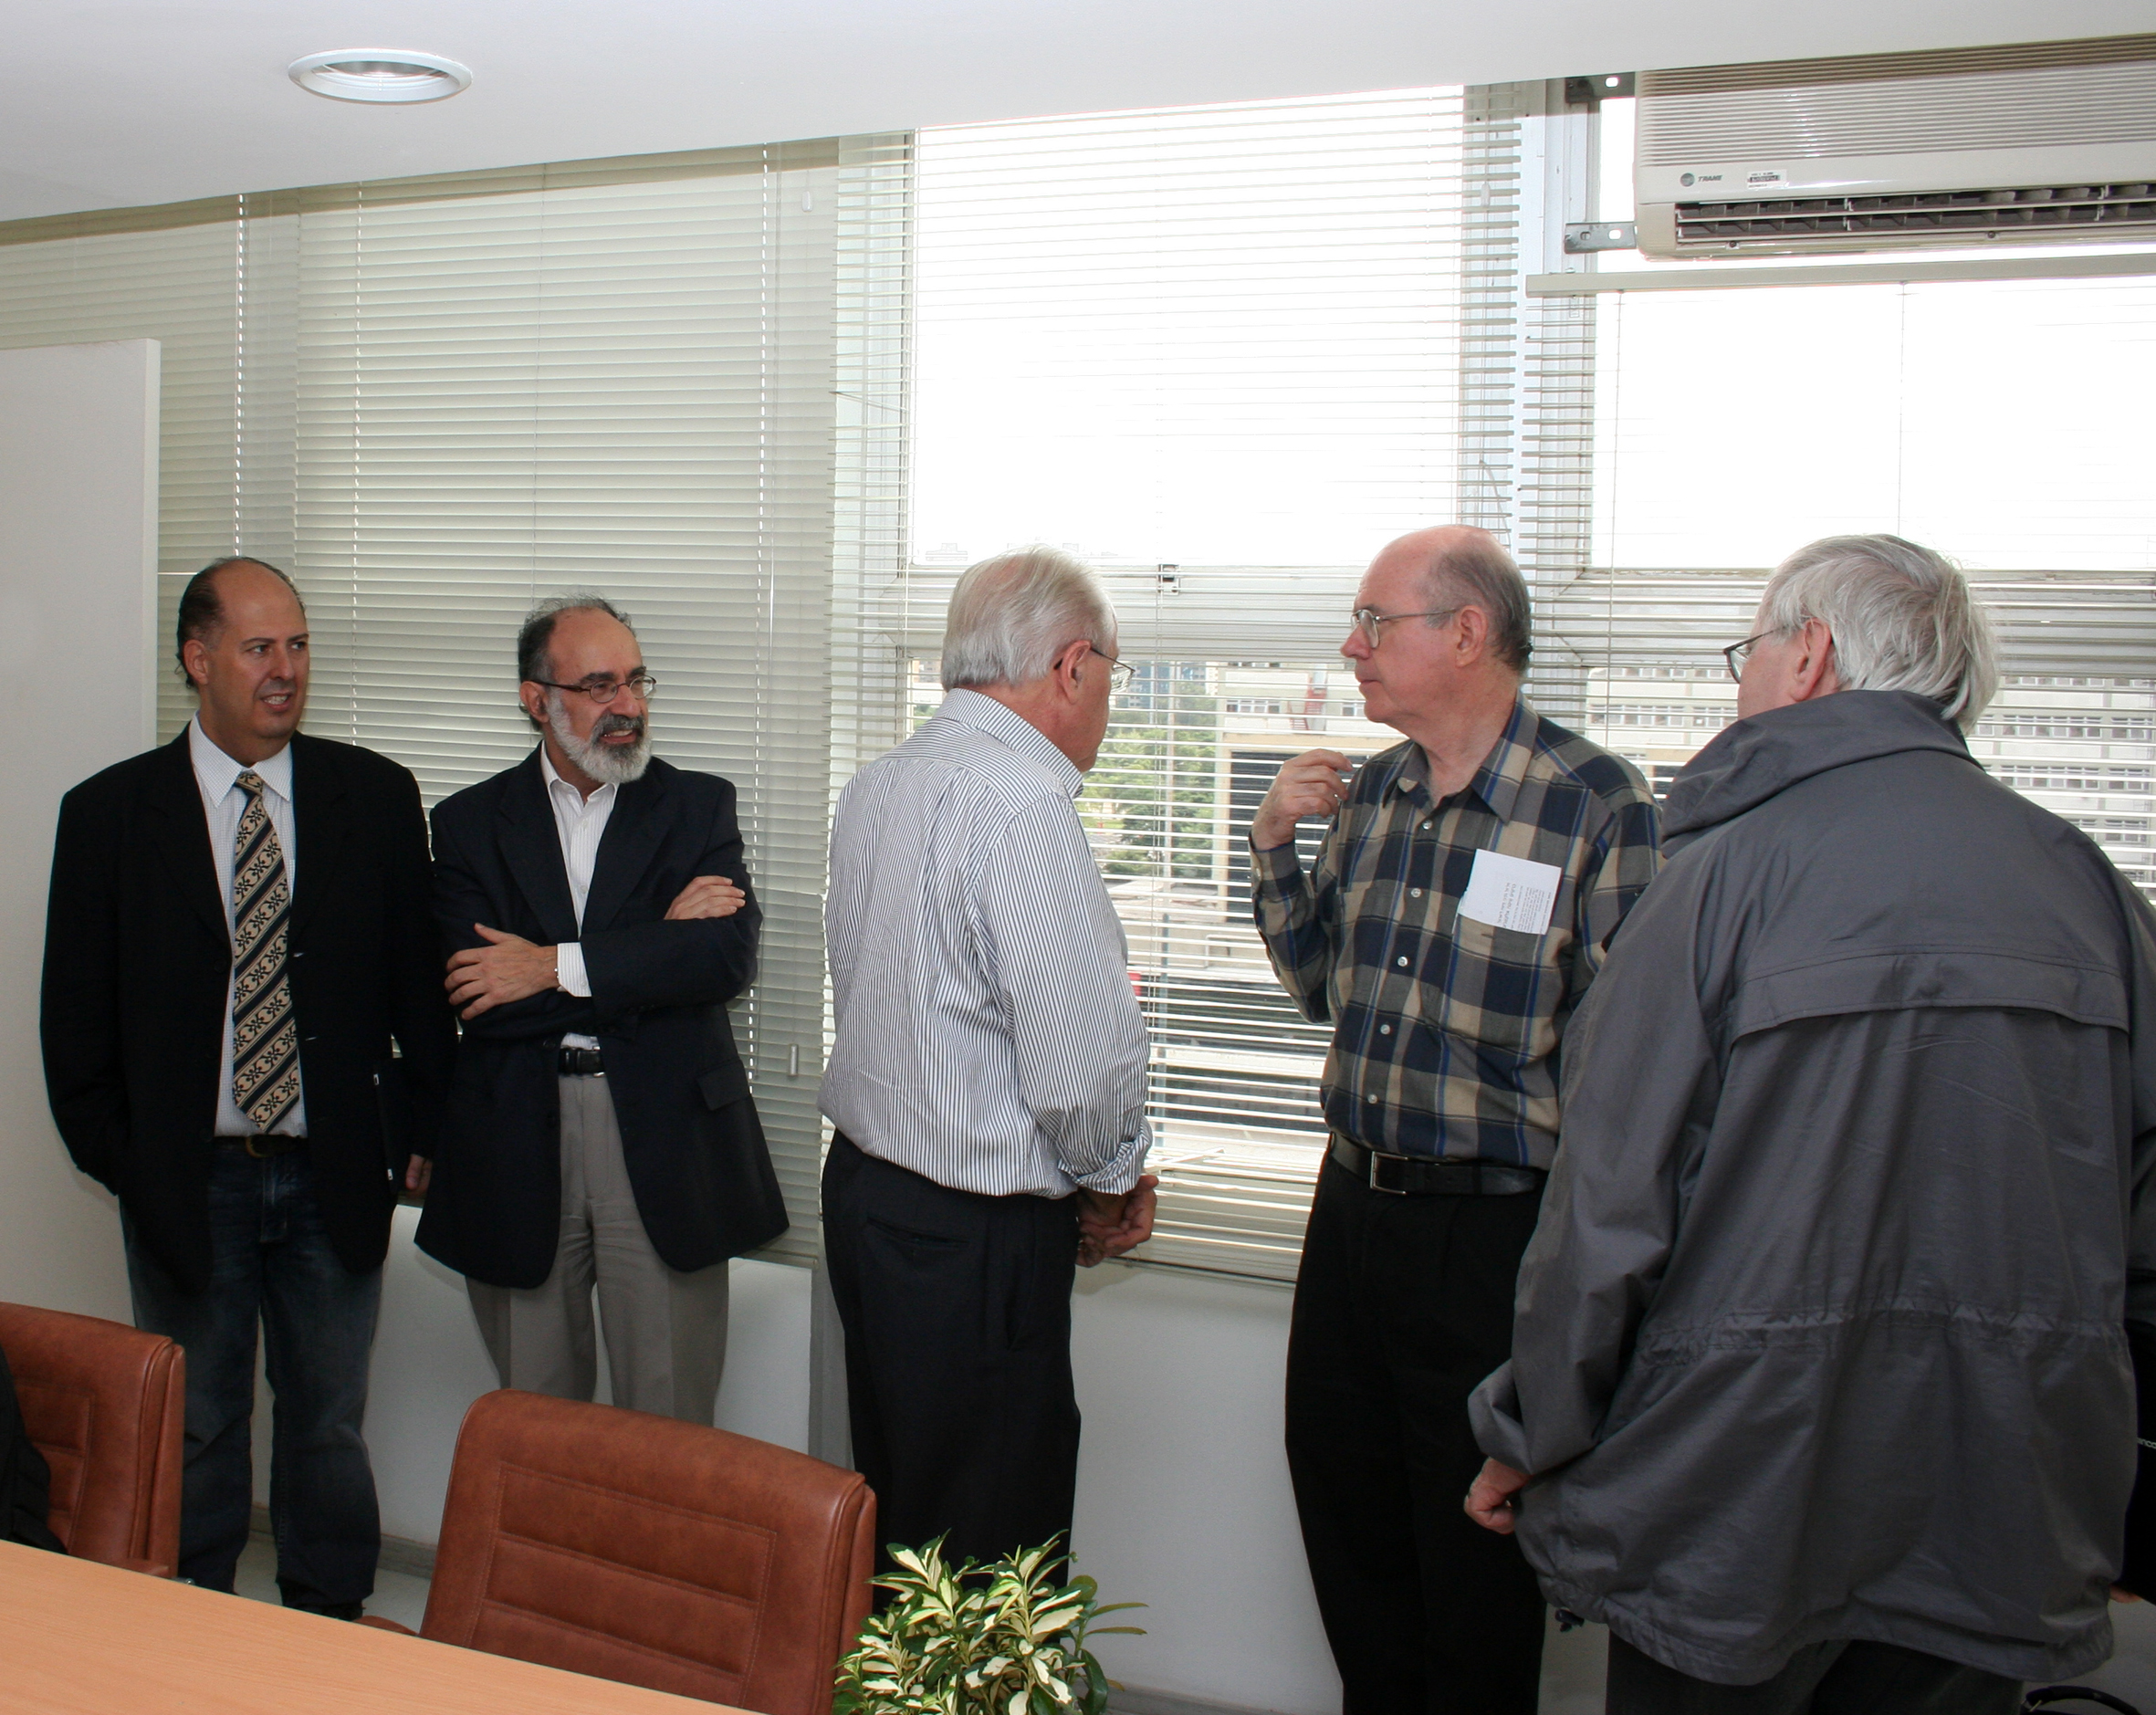 Guilherme Ary Plonski, César Ades, Eliezer Rabinovici and Peter Goddard